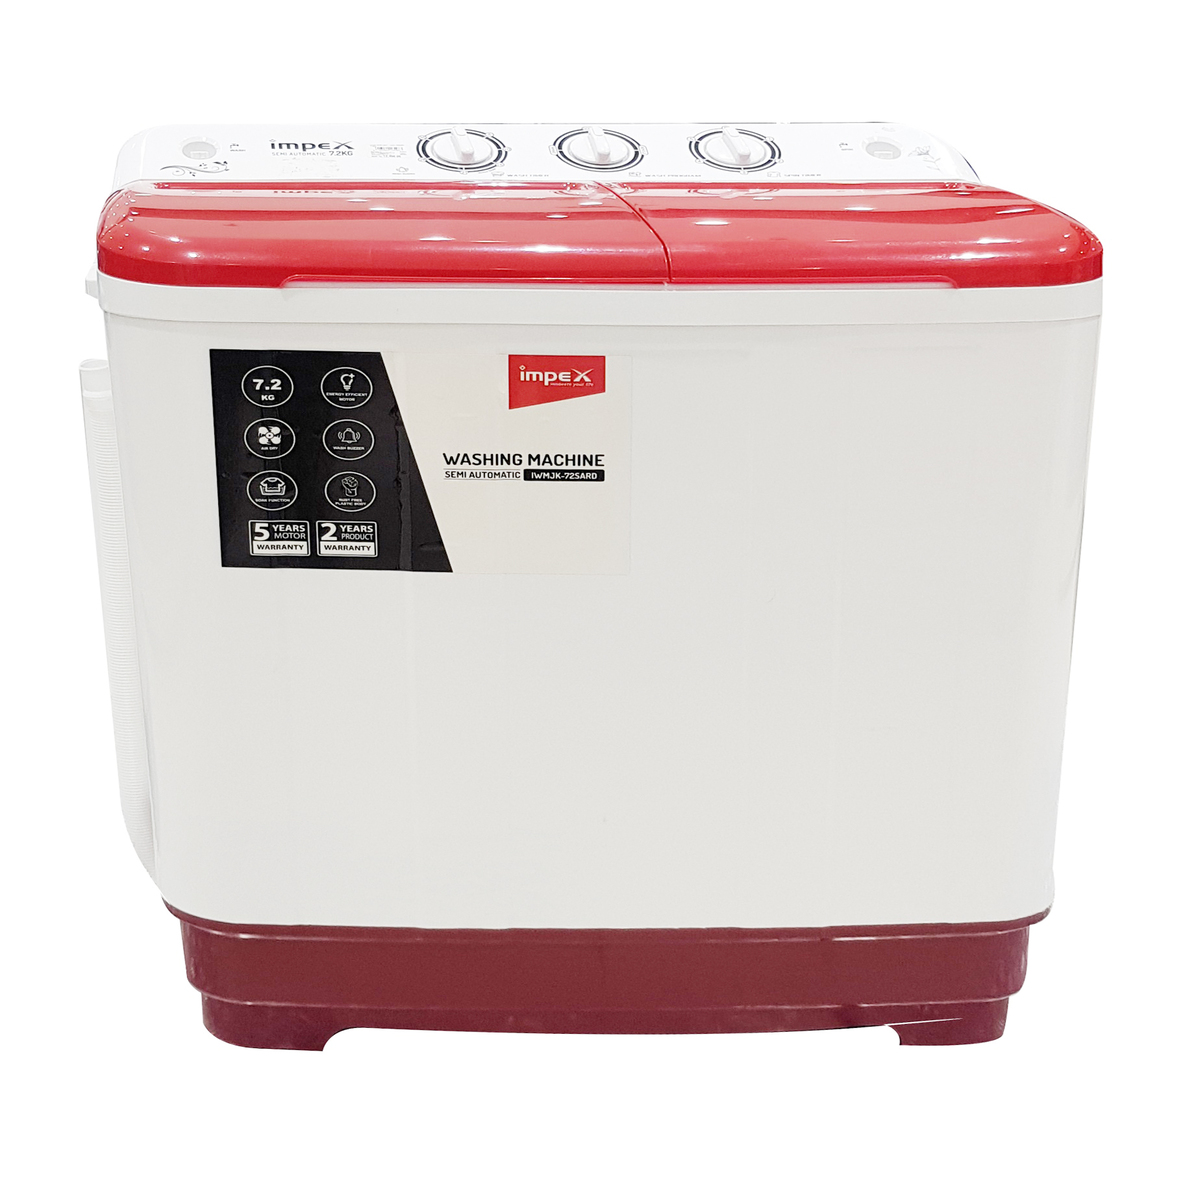 Impex Semi Automatic Washing Machine 72SARD 7.2kg